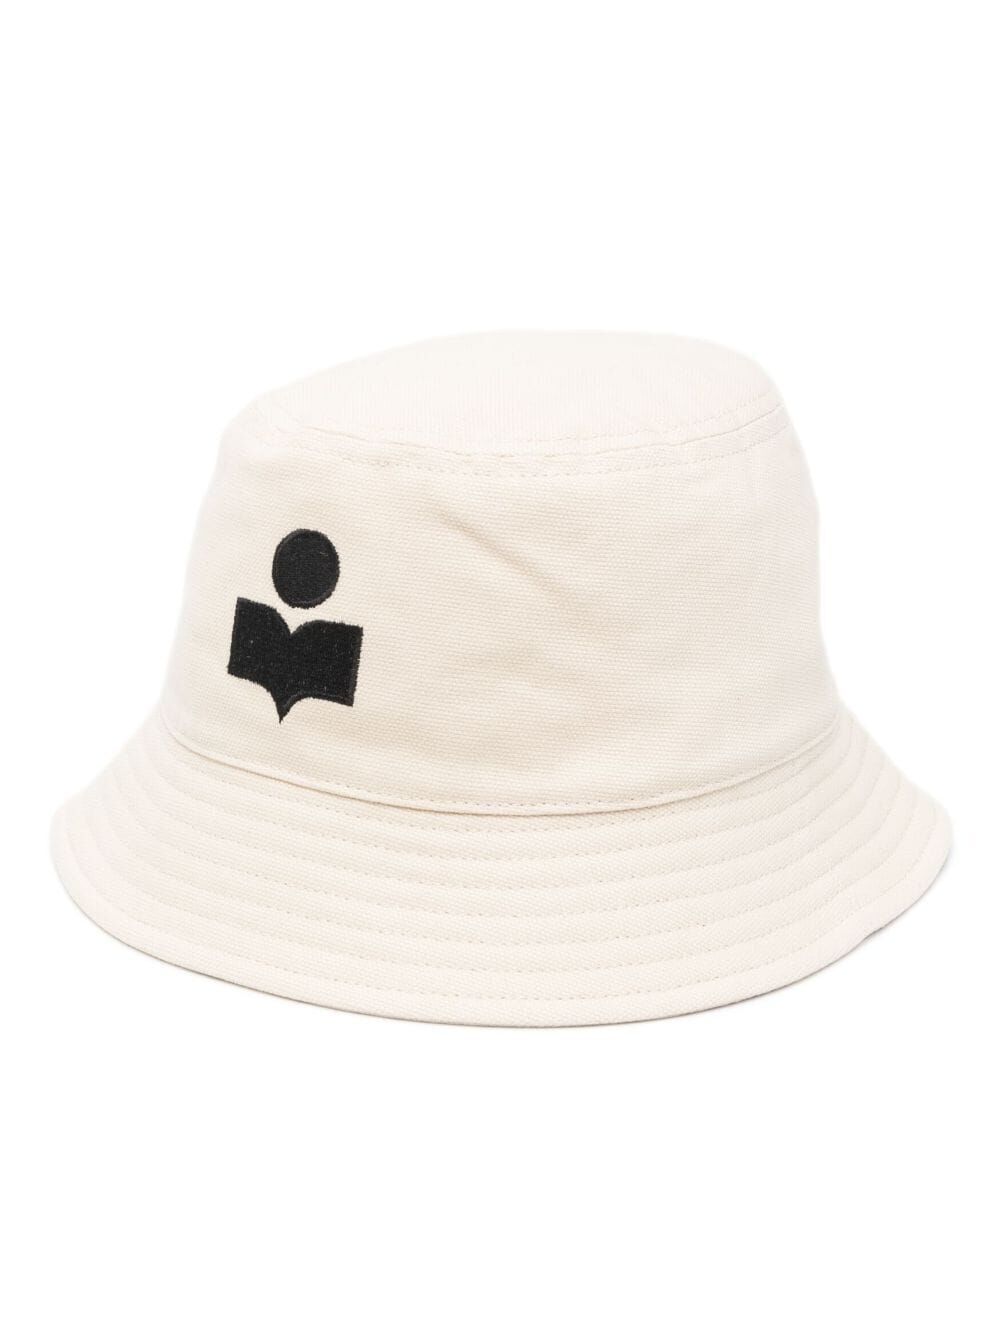 Marant Haley Hat In White